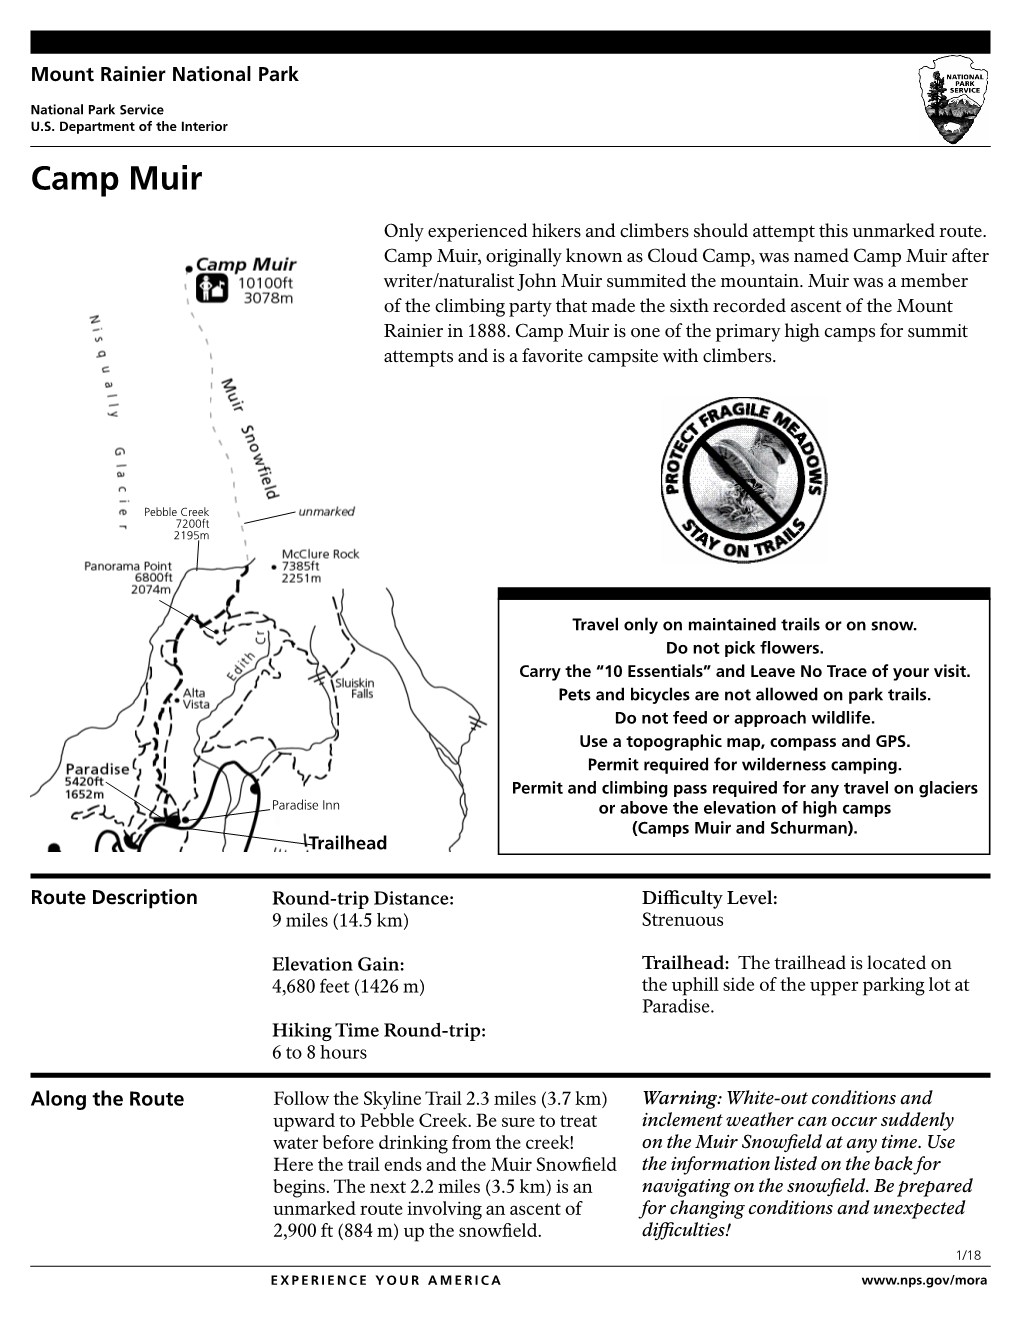 Camp Muir Route